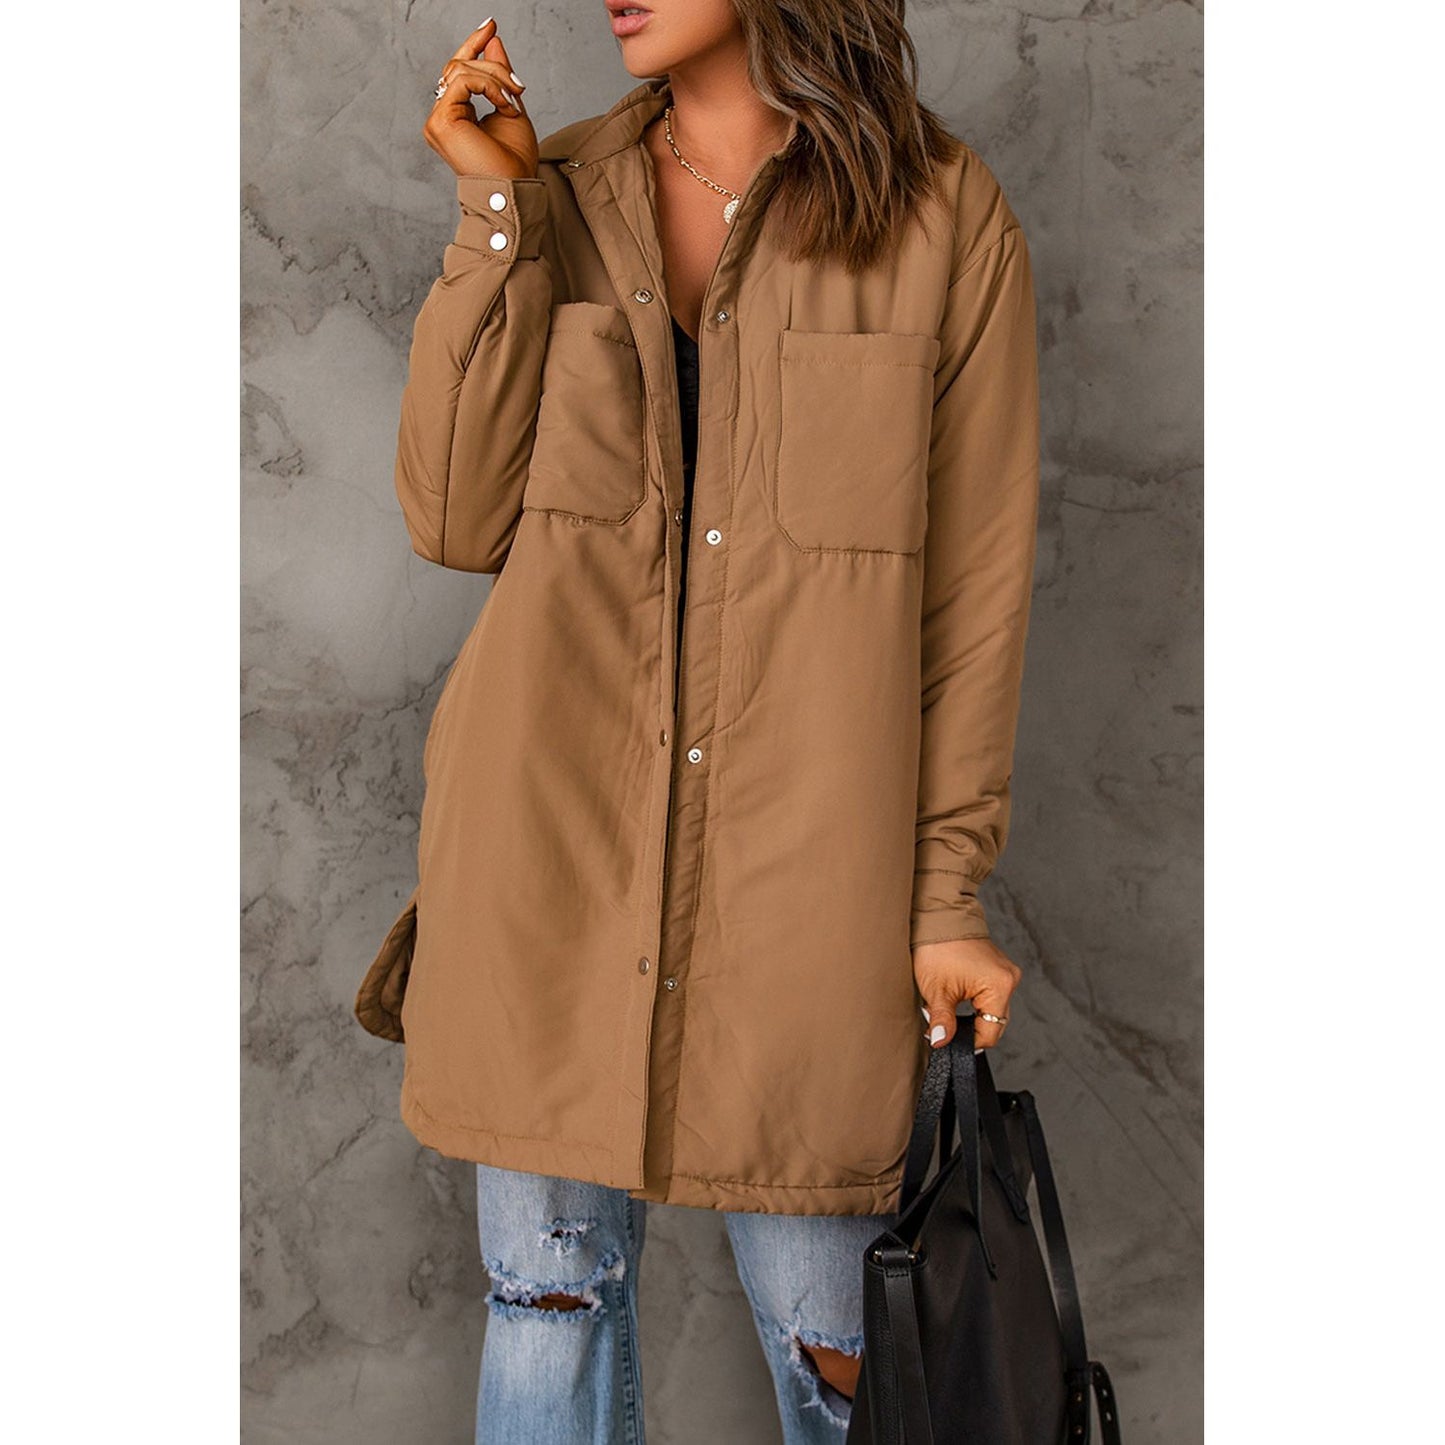 Snap Down Side Slit Jacket with Pockets - TiffanyzKlozet